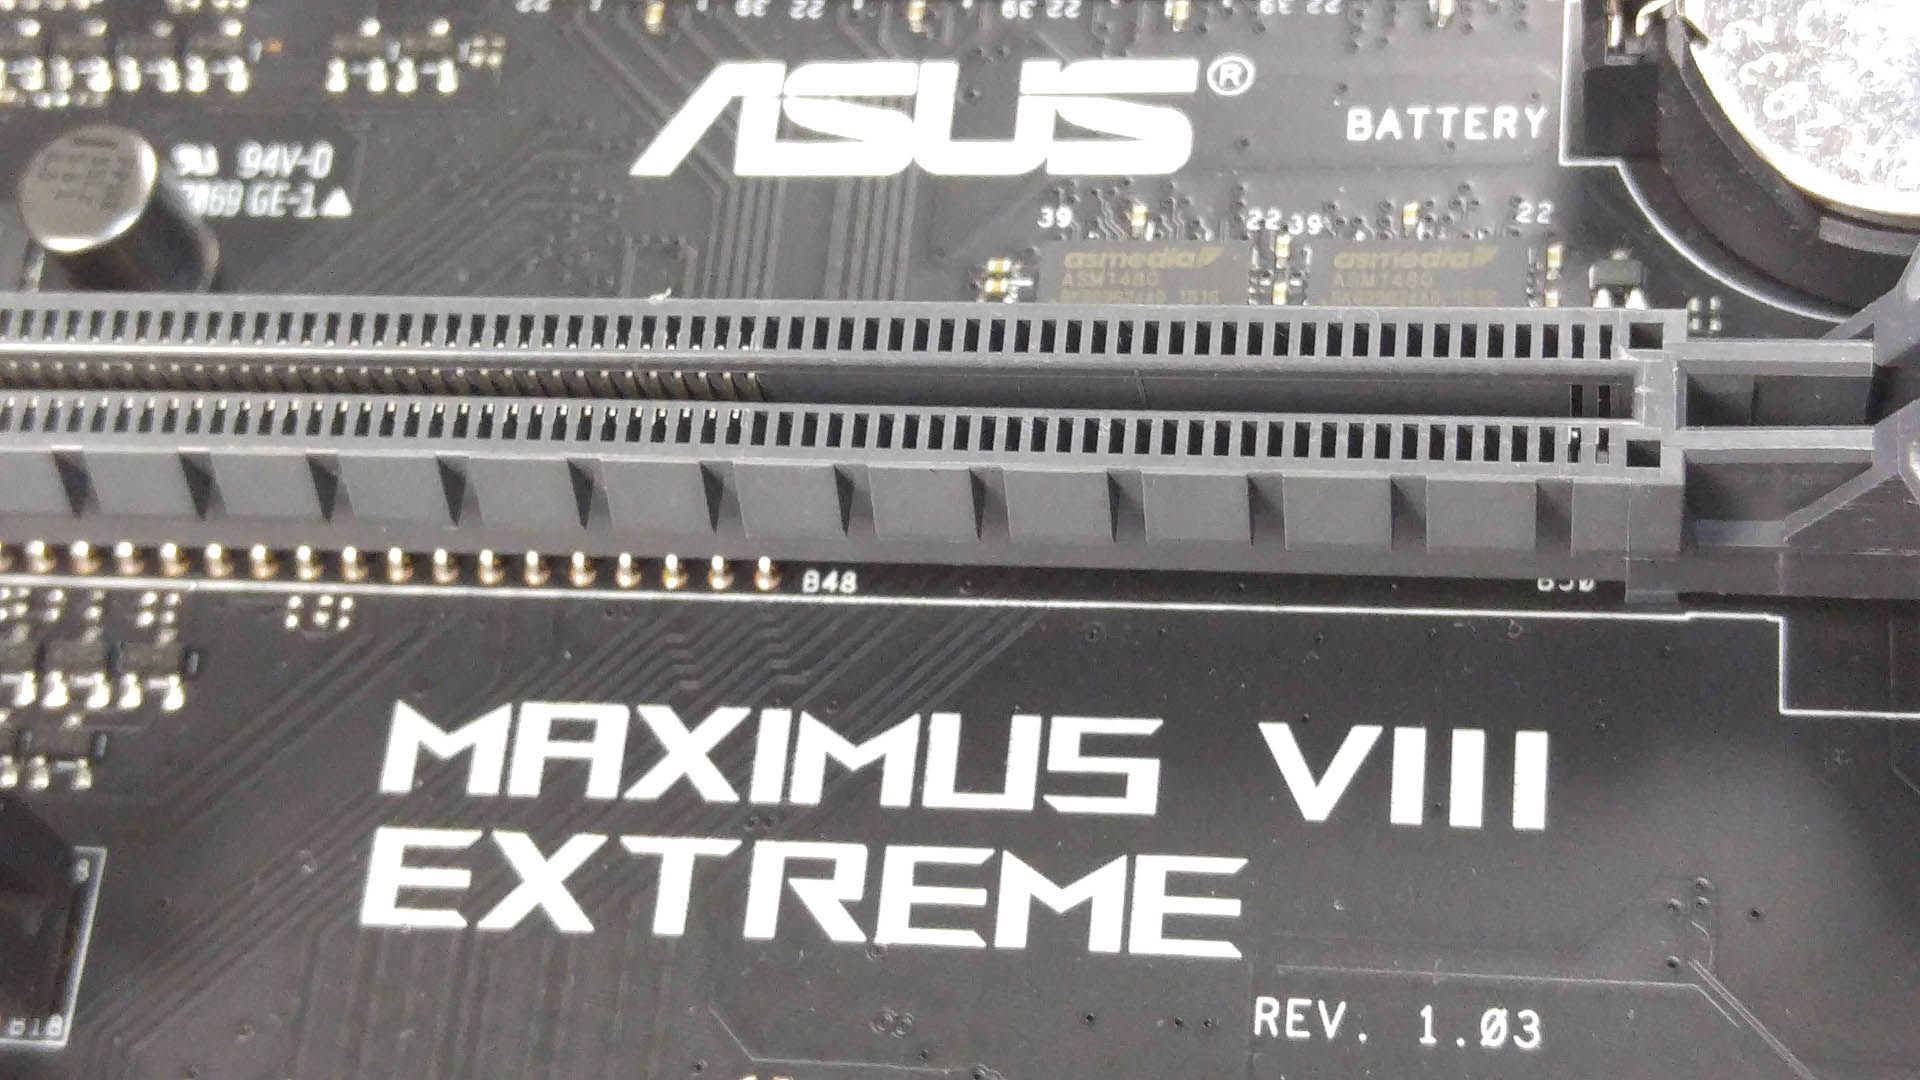 Maximus VIII Extreme